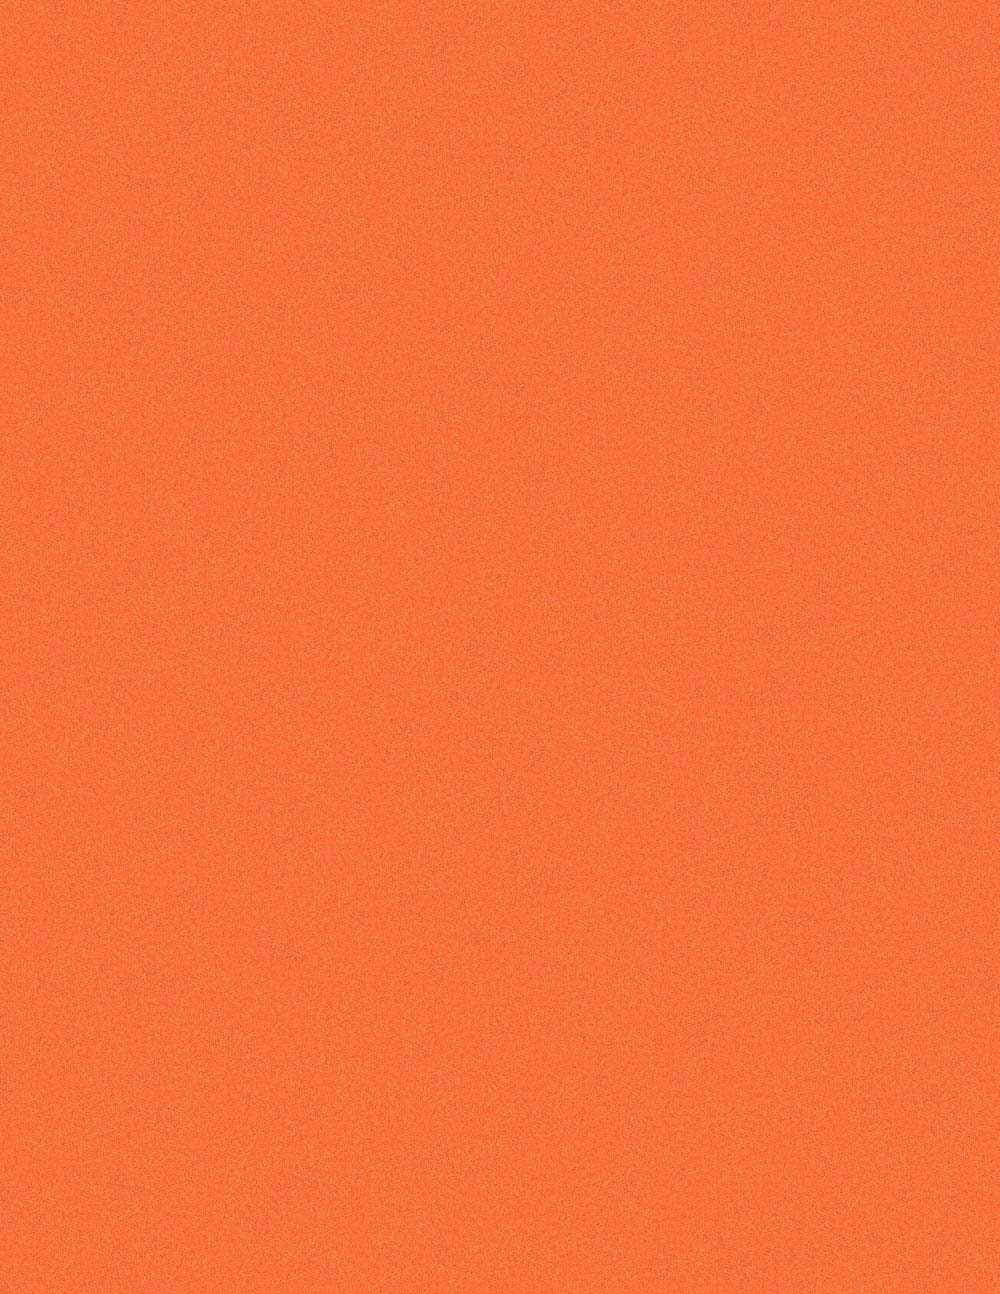 Arancio Siro | Orange Colored Cardstock Paper